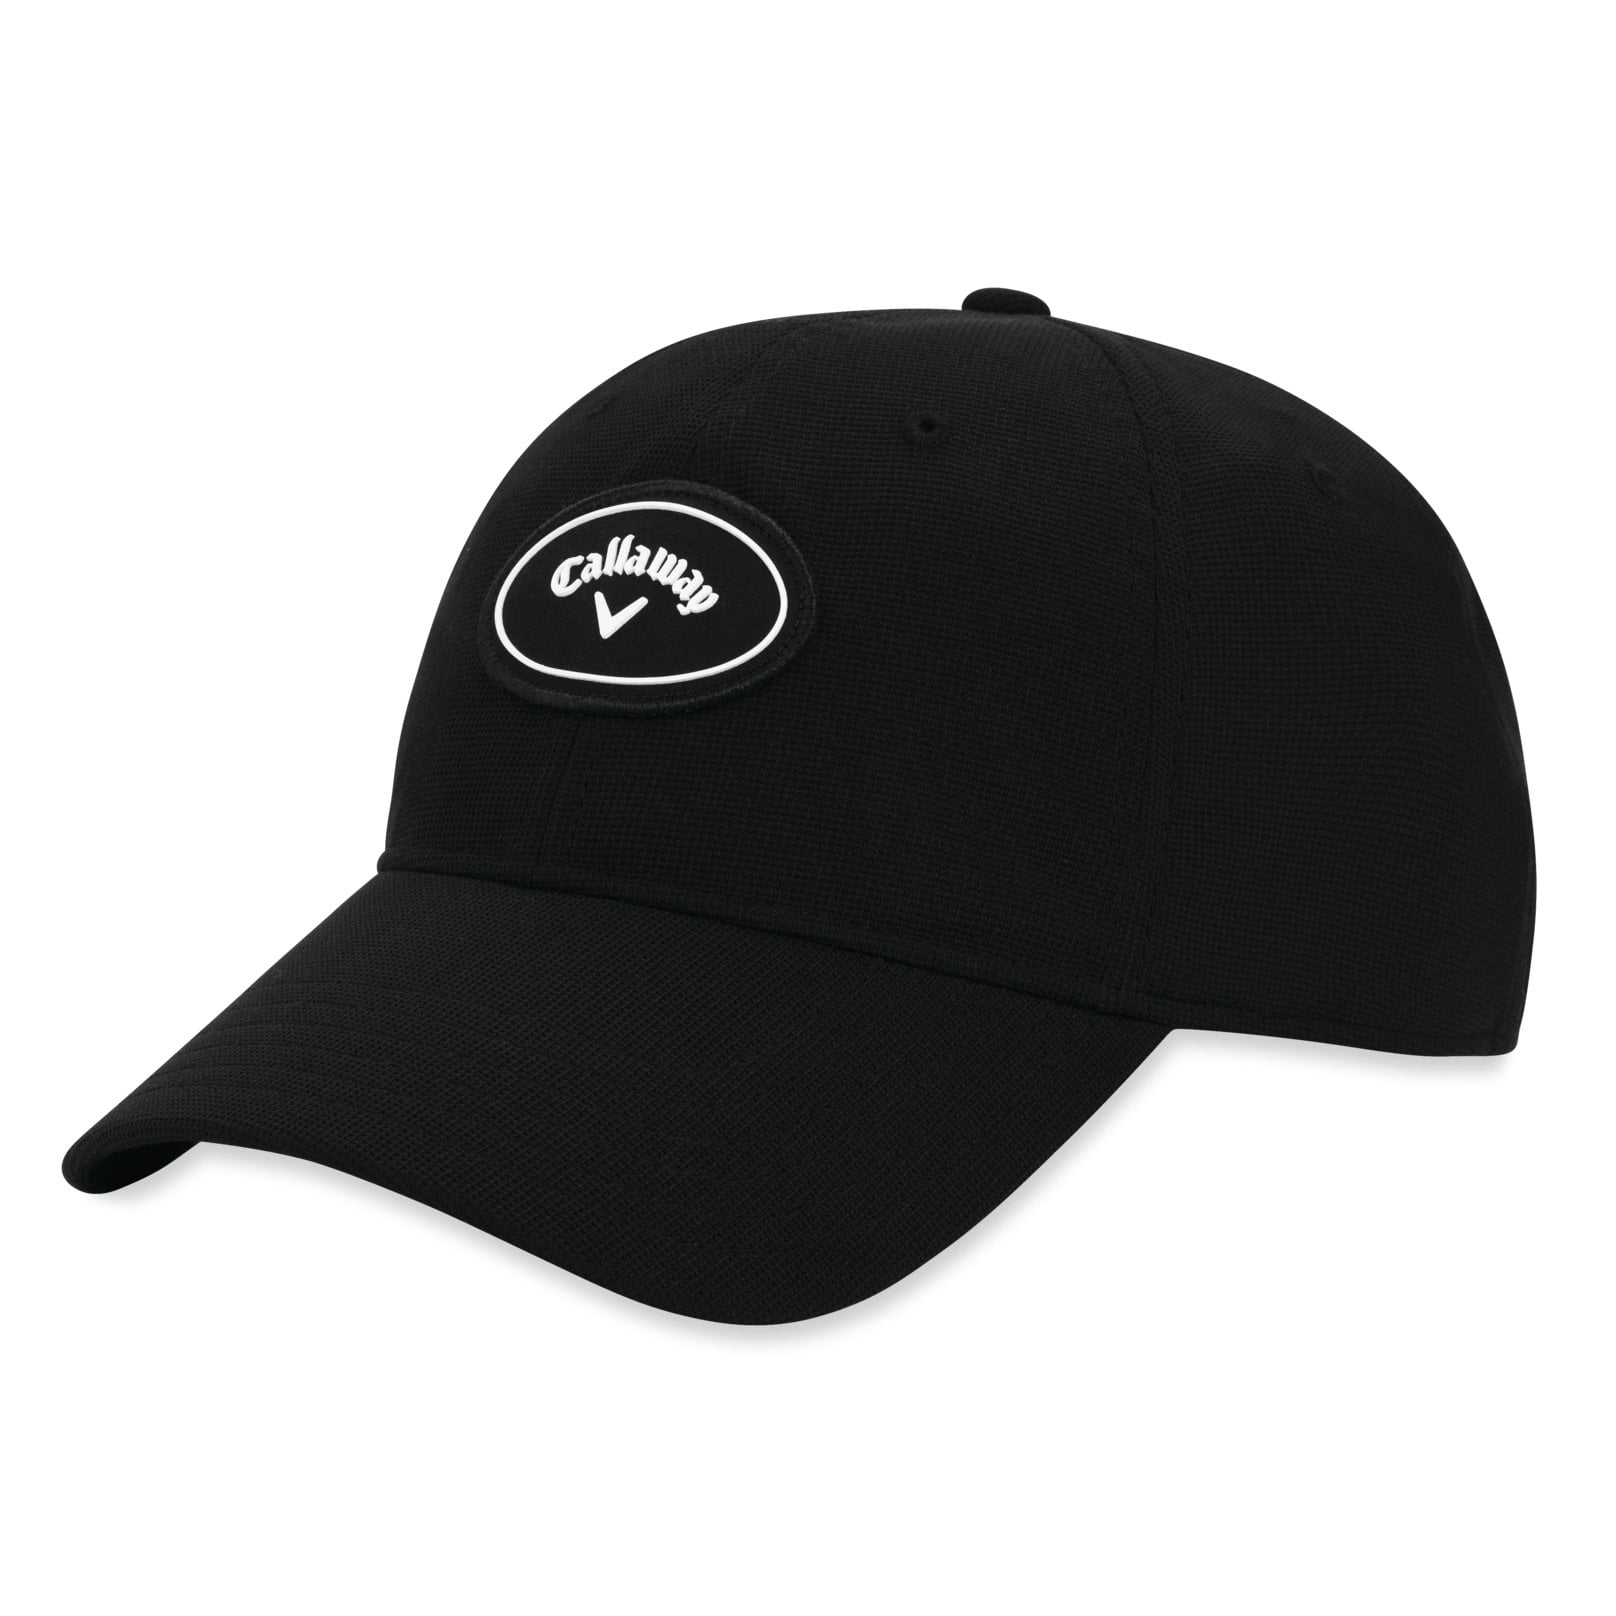 NEW Callaway Golf Stretch Black Fitted S/M Hat/Cap - Walmart.com